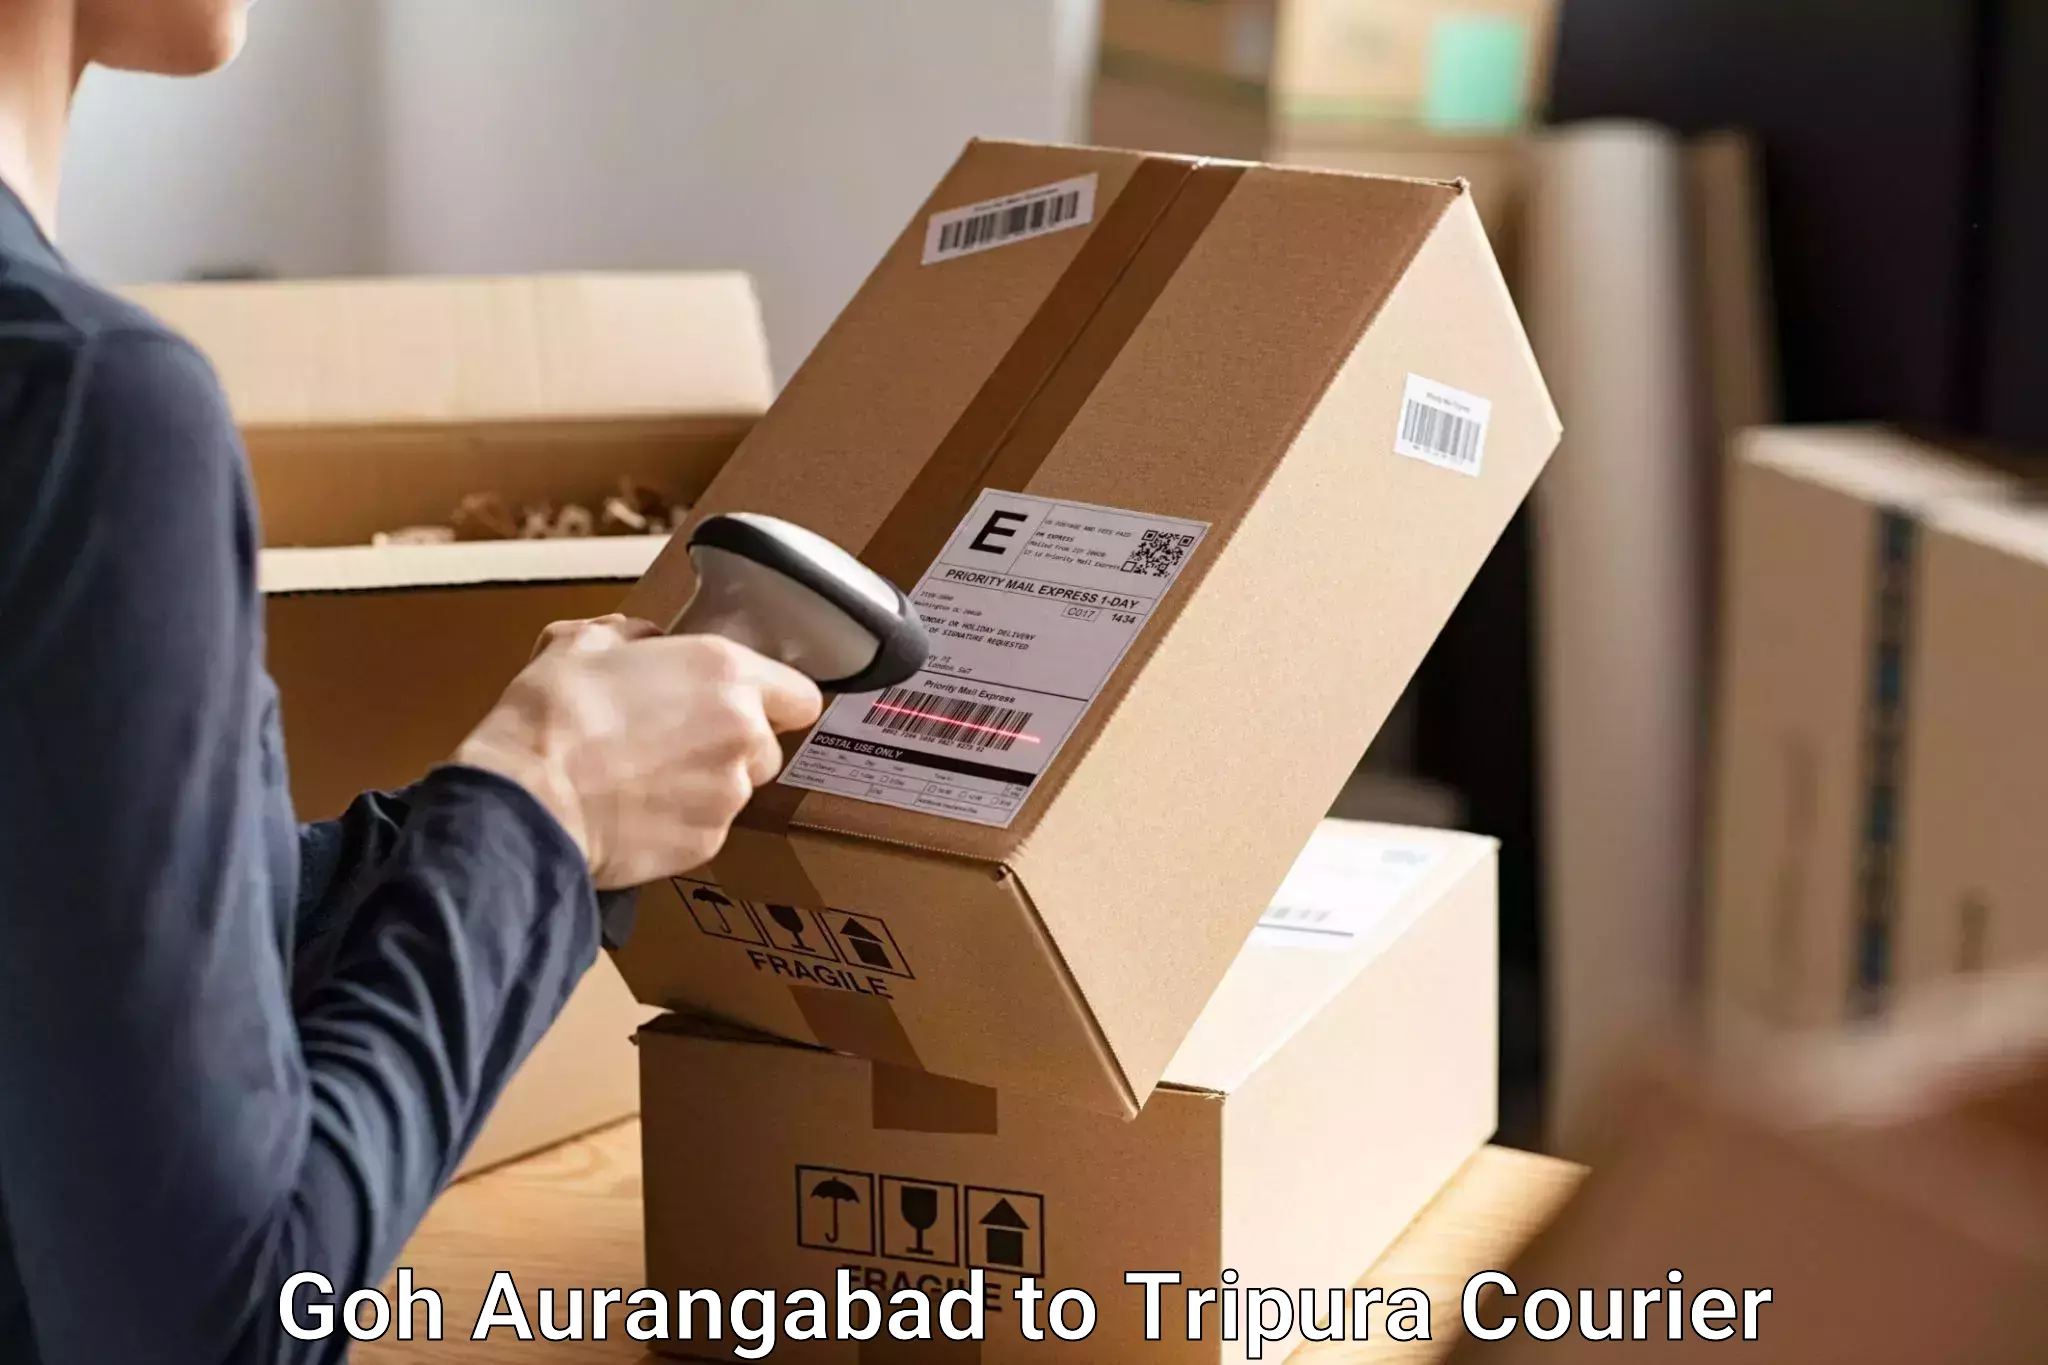 Luggage delivery app Goh Aurangabad to Udaipur Tripura